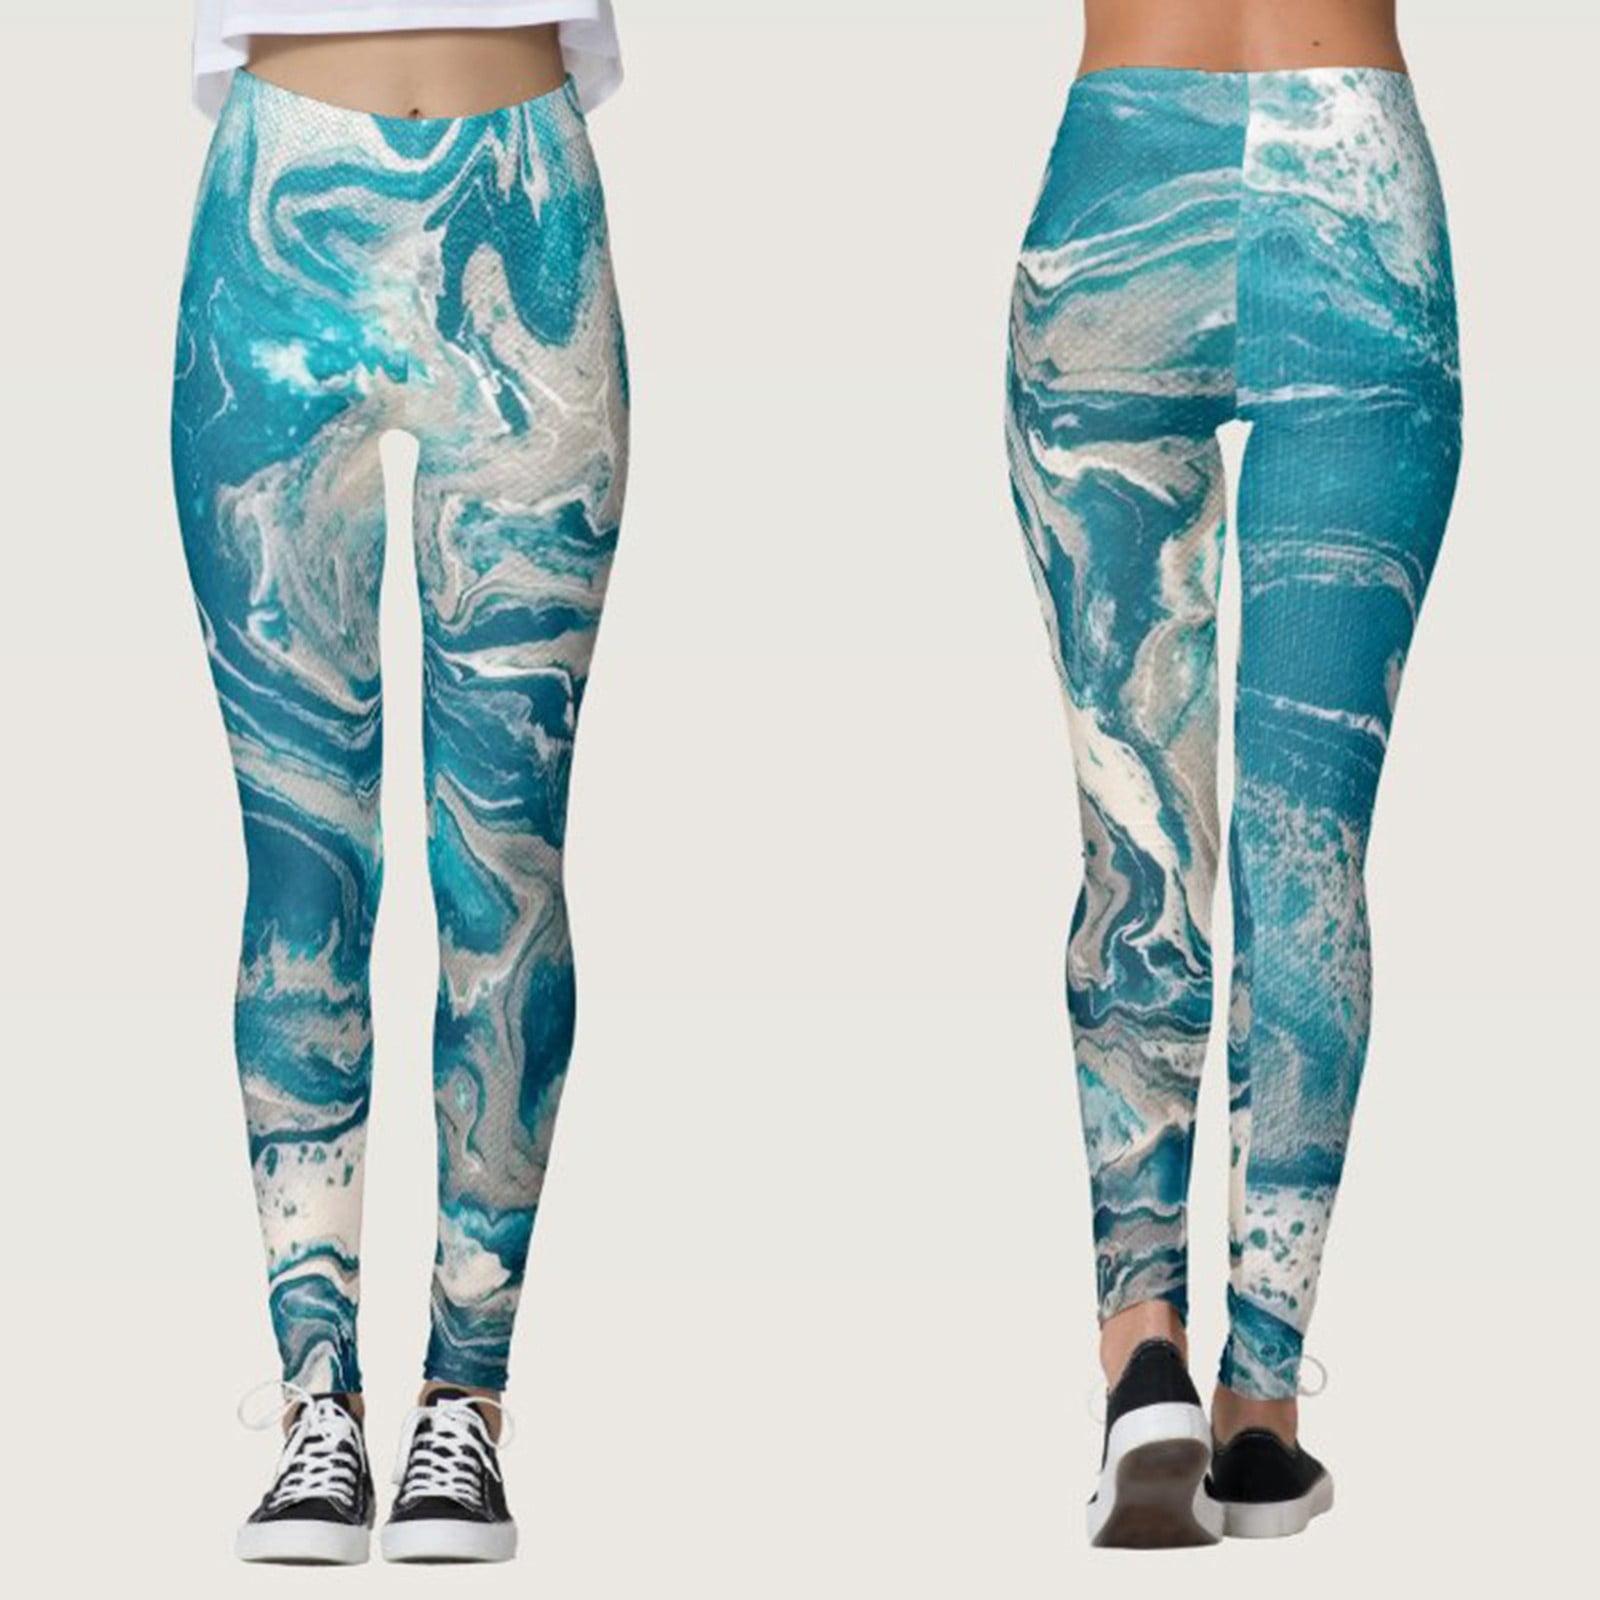 Women Colorful Floral Custom Print Navy Daisy Leggings Skinny Pants For Yoga Running Pilates - Walmart.com